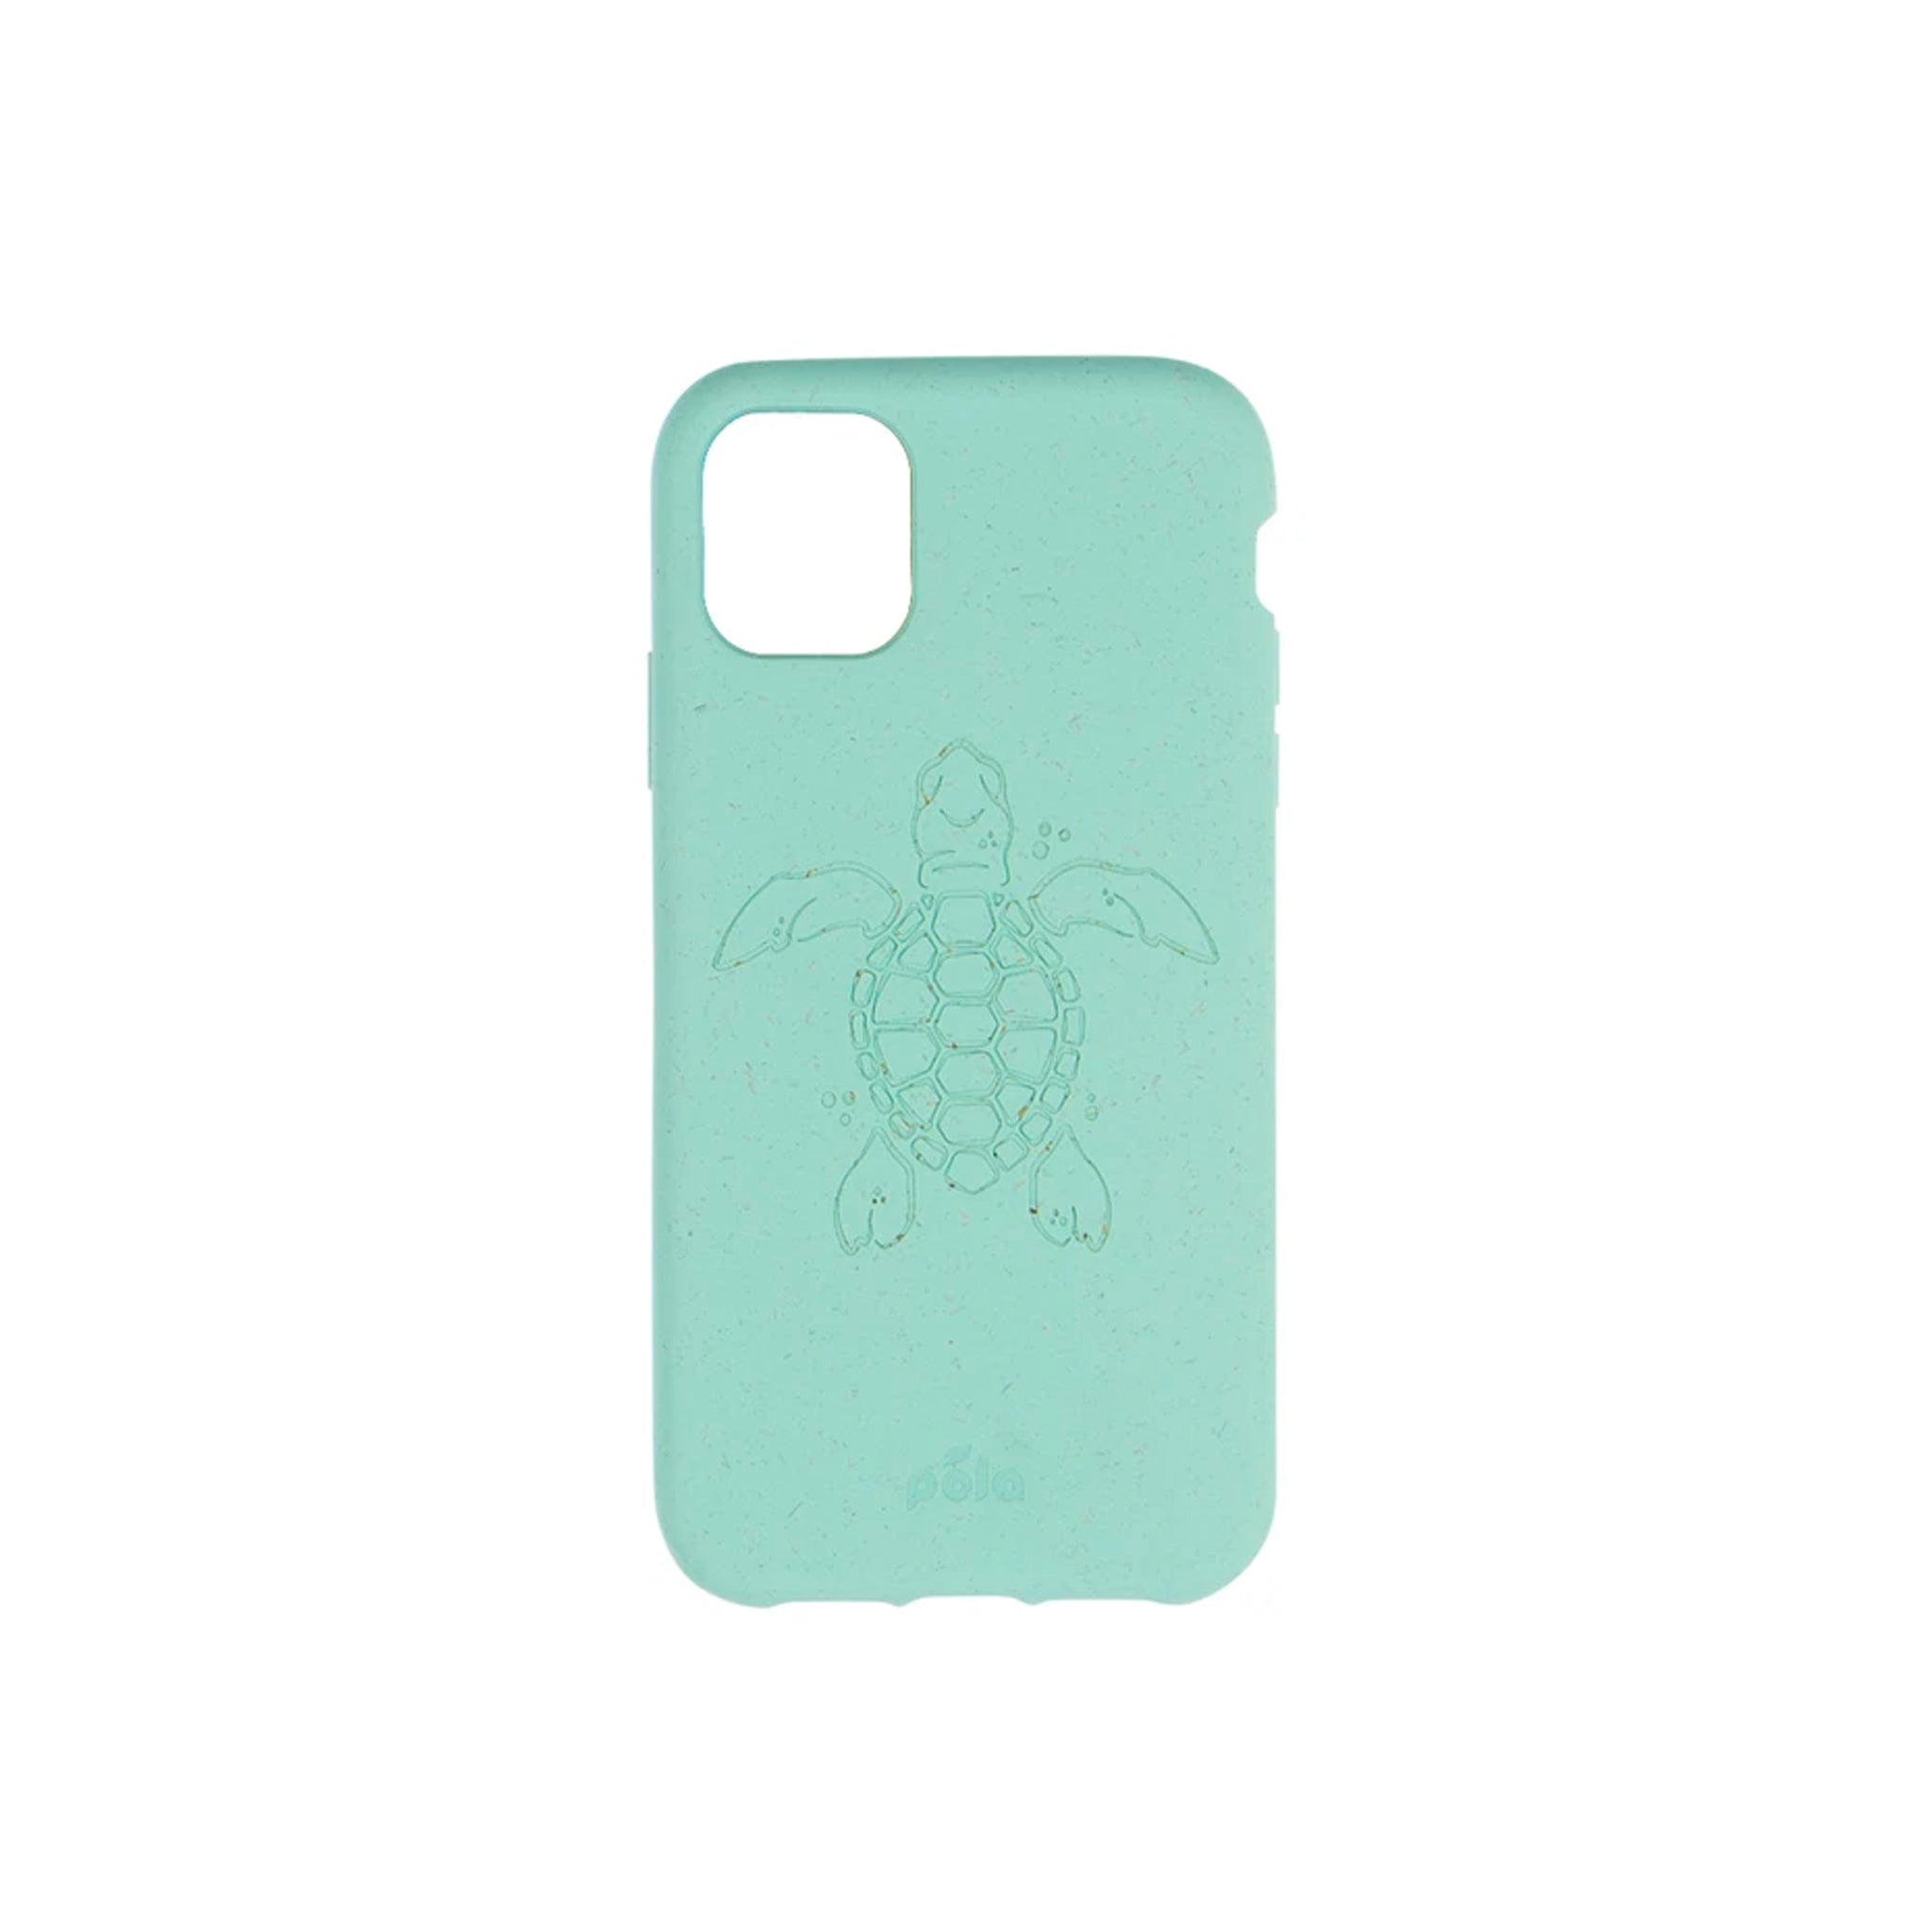 Pela - Eco Friendly Case For Apple Iphone 12 Mini - Ocean Turquoise Turtle Edition